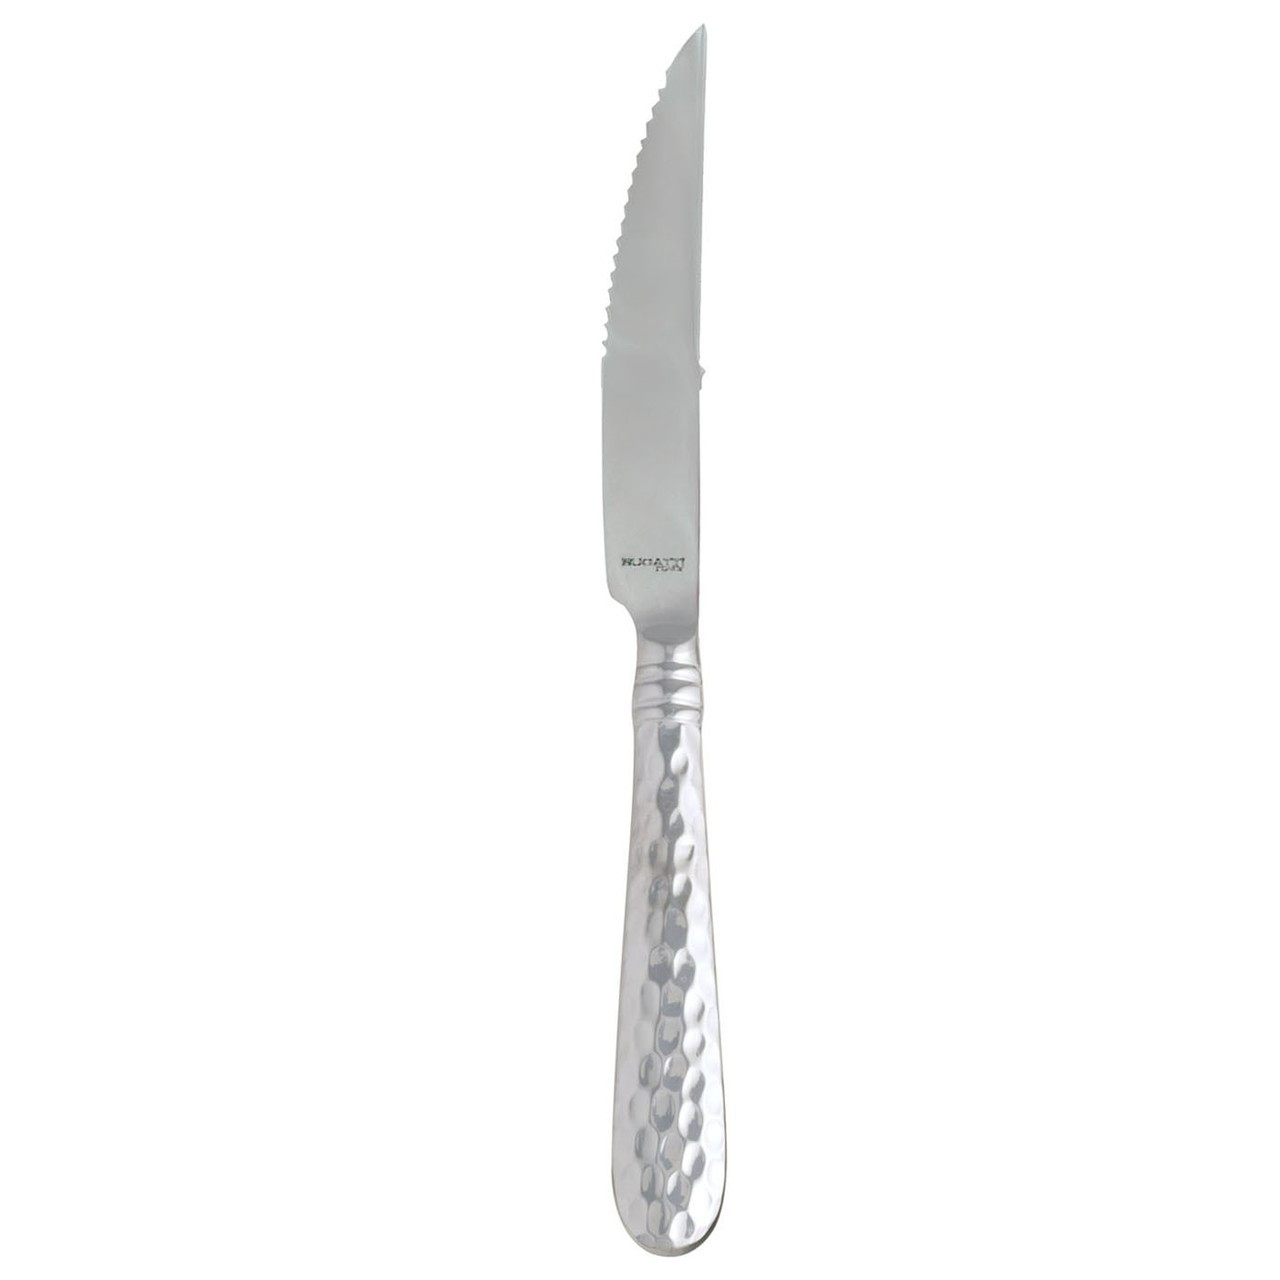 Vietri Settimocielo Steak Knives - Set of 4